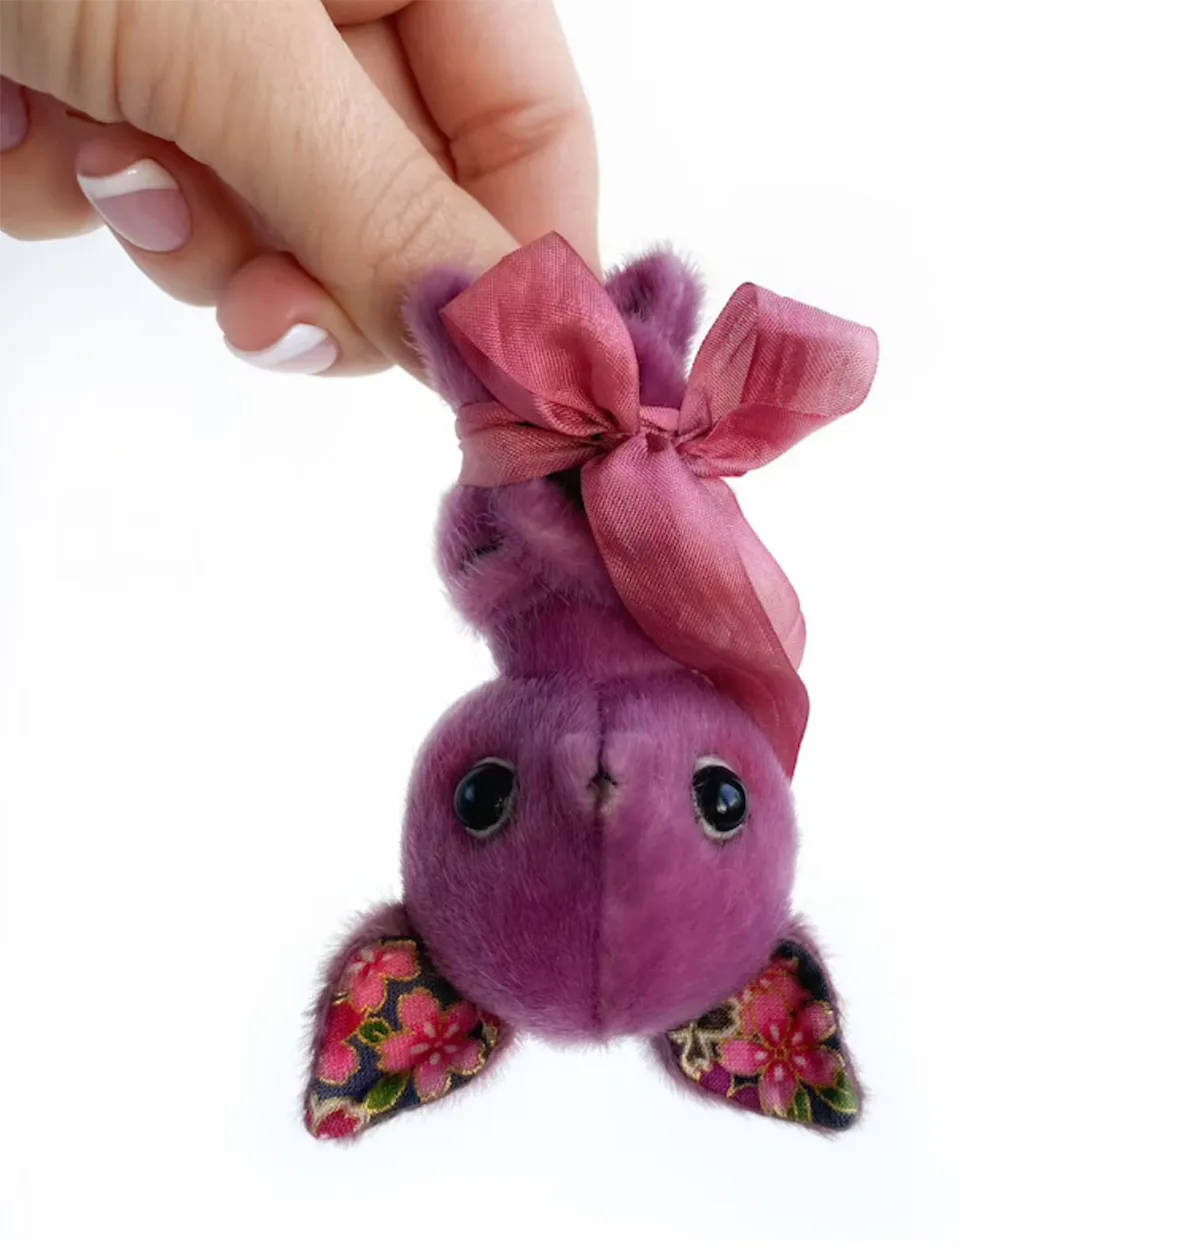 Halloween sewing pattern – bat toy